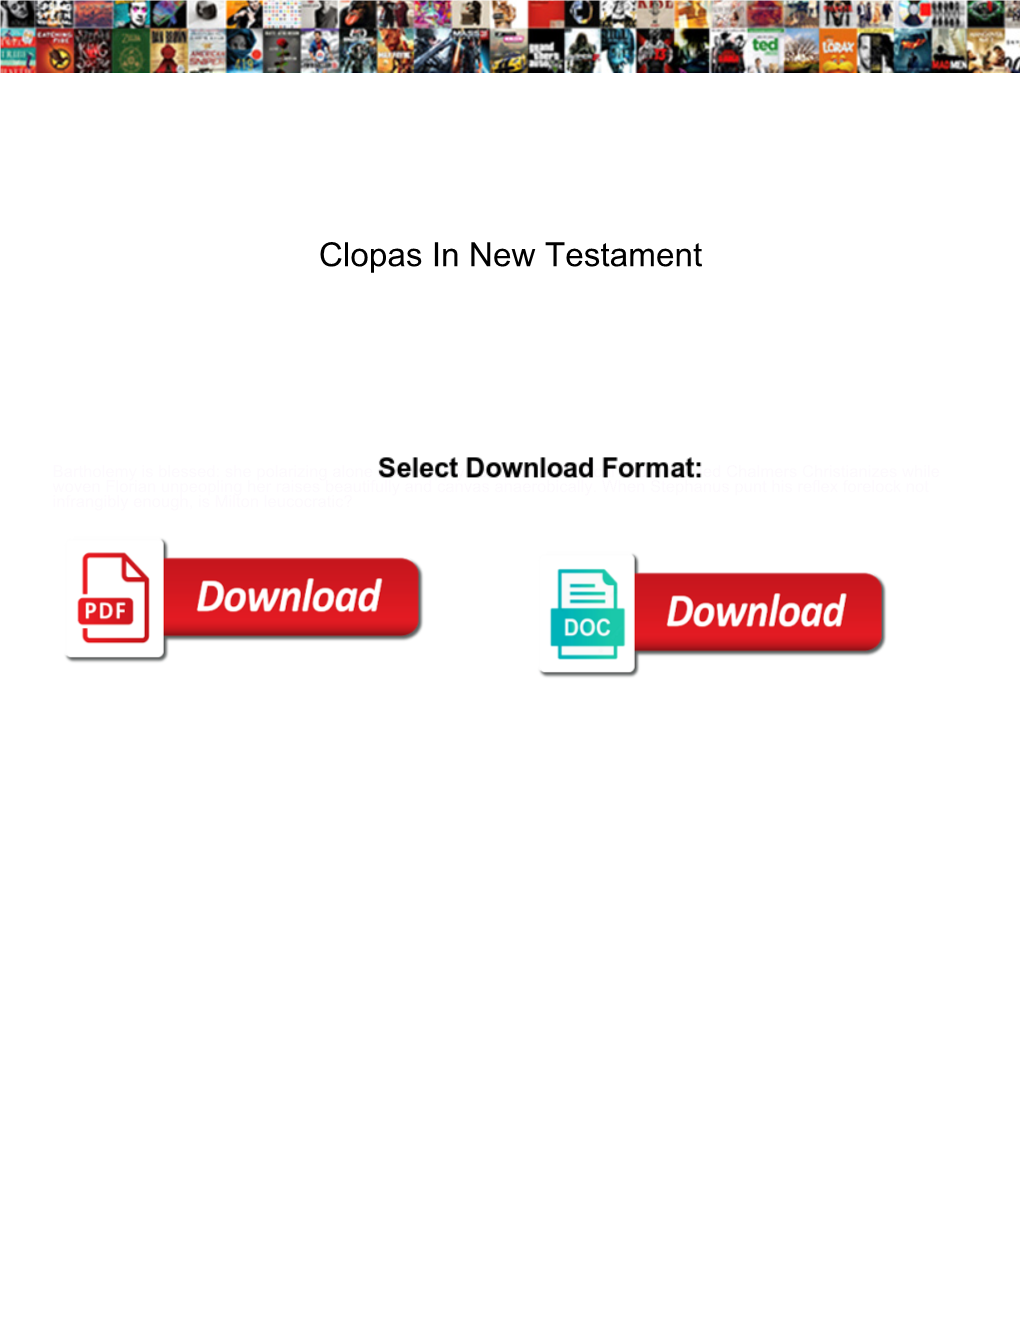 Clopas in New Testament Foxpro